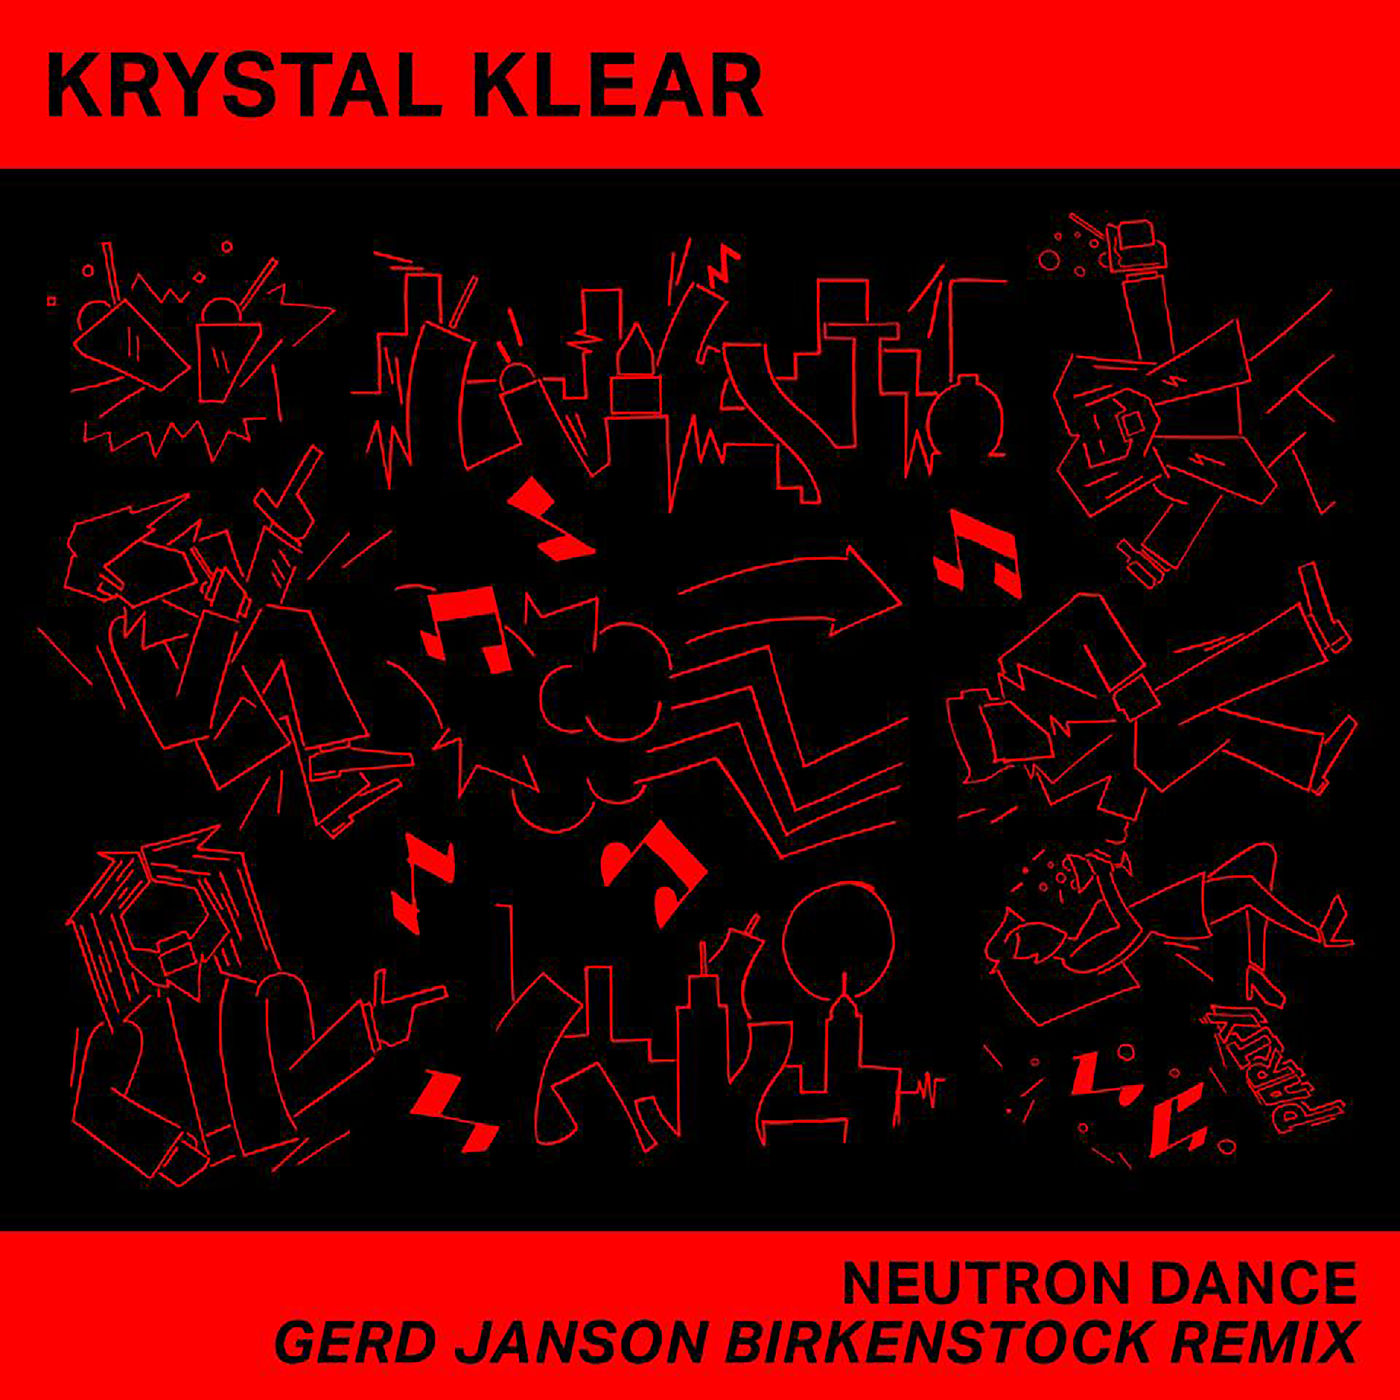 Krystal Klear - Neutron Dance (Gerd Janson Birkenstock Remix) / Running Back